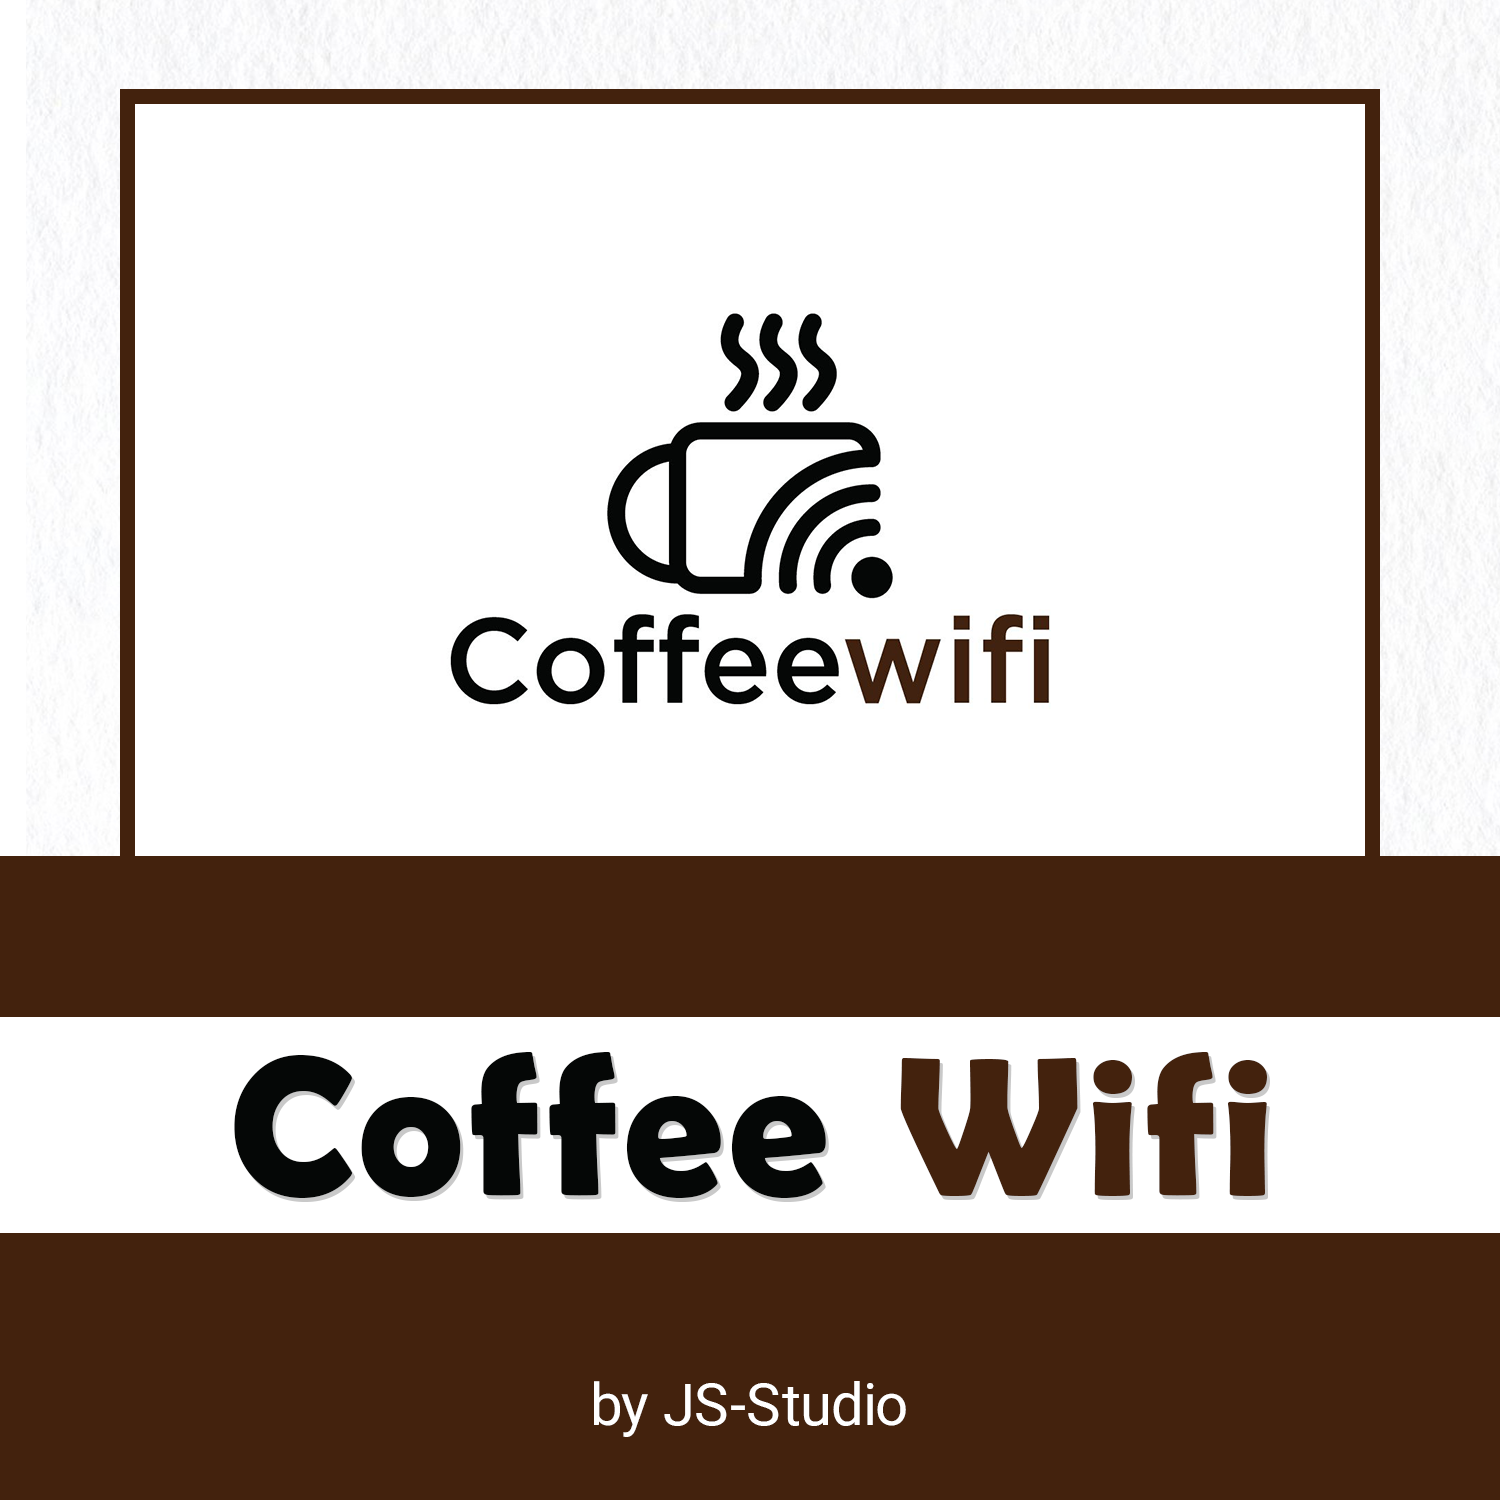 Coffee Wifi cover.